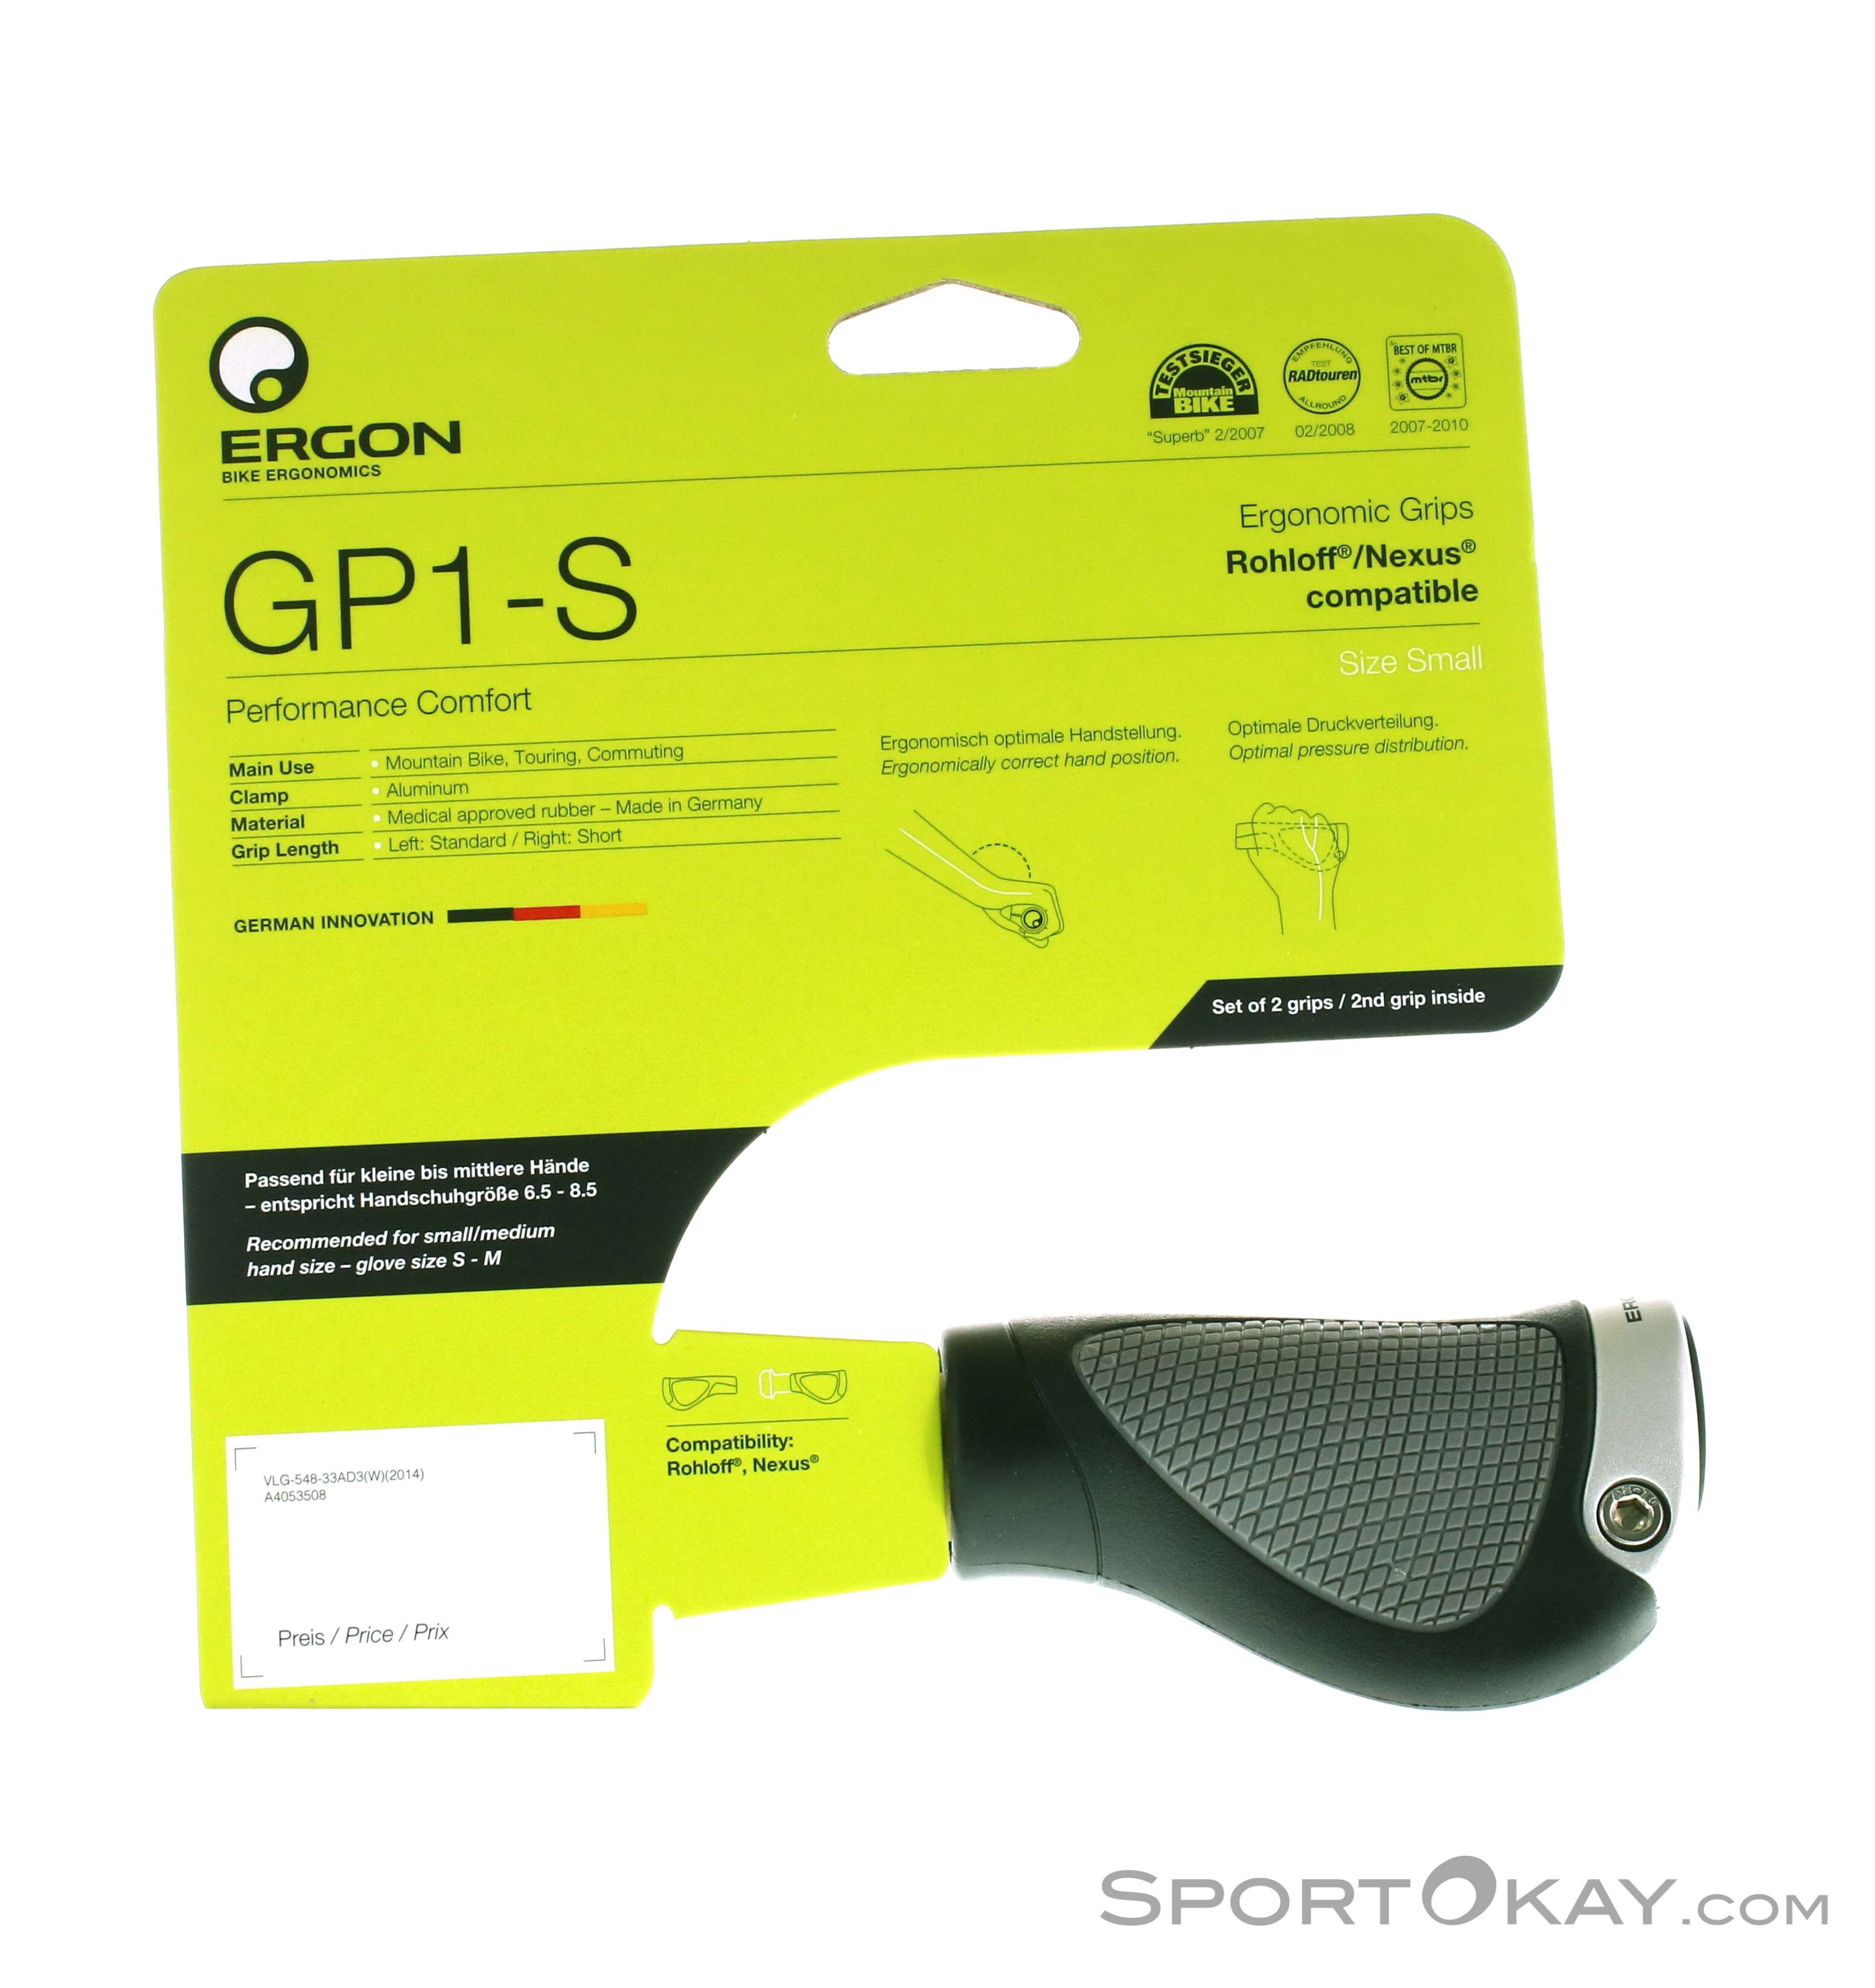 Auroch Beroep Begroeten Ergon GP 1 Rohloff/Nexus Grips - Grips & Barends - Components - Bike - All